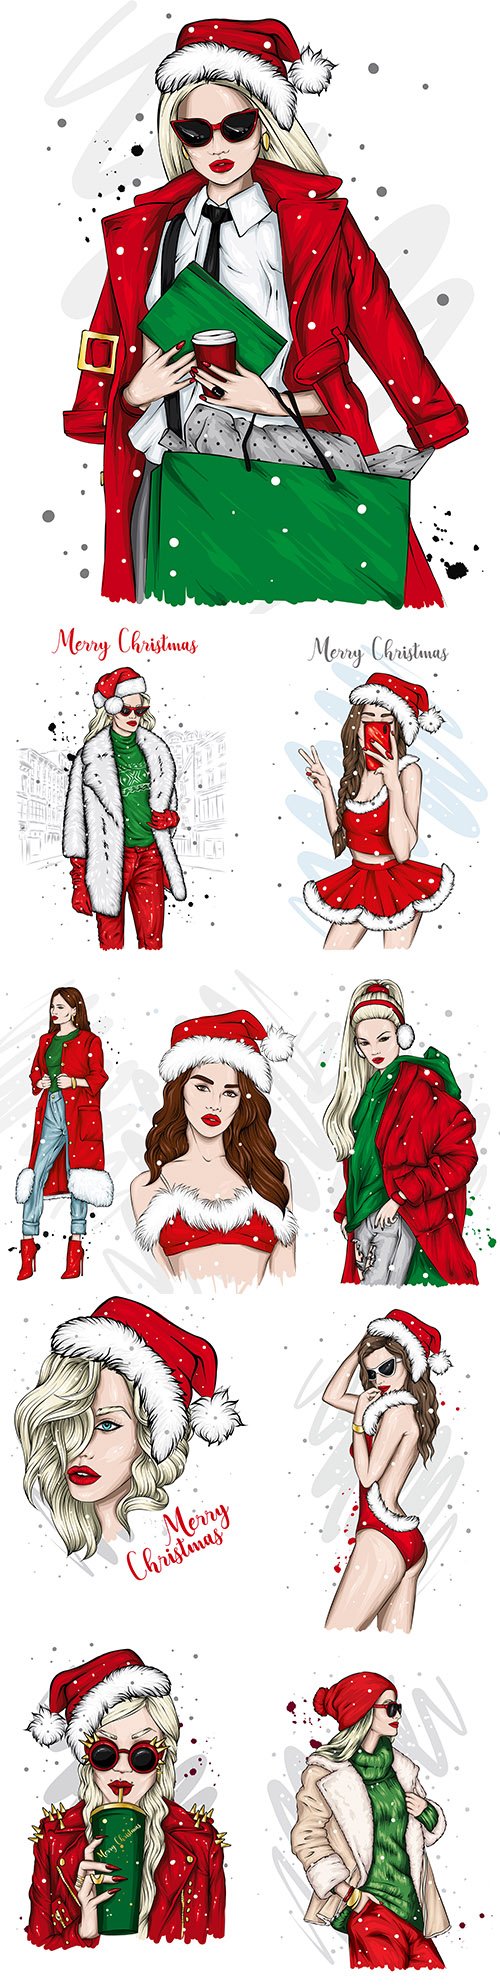 The beautiful girl in Santa's hat Christmas illustrations
